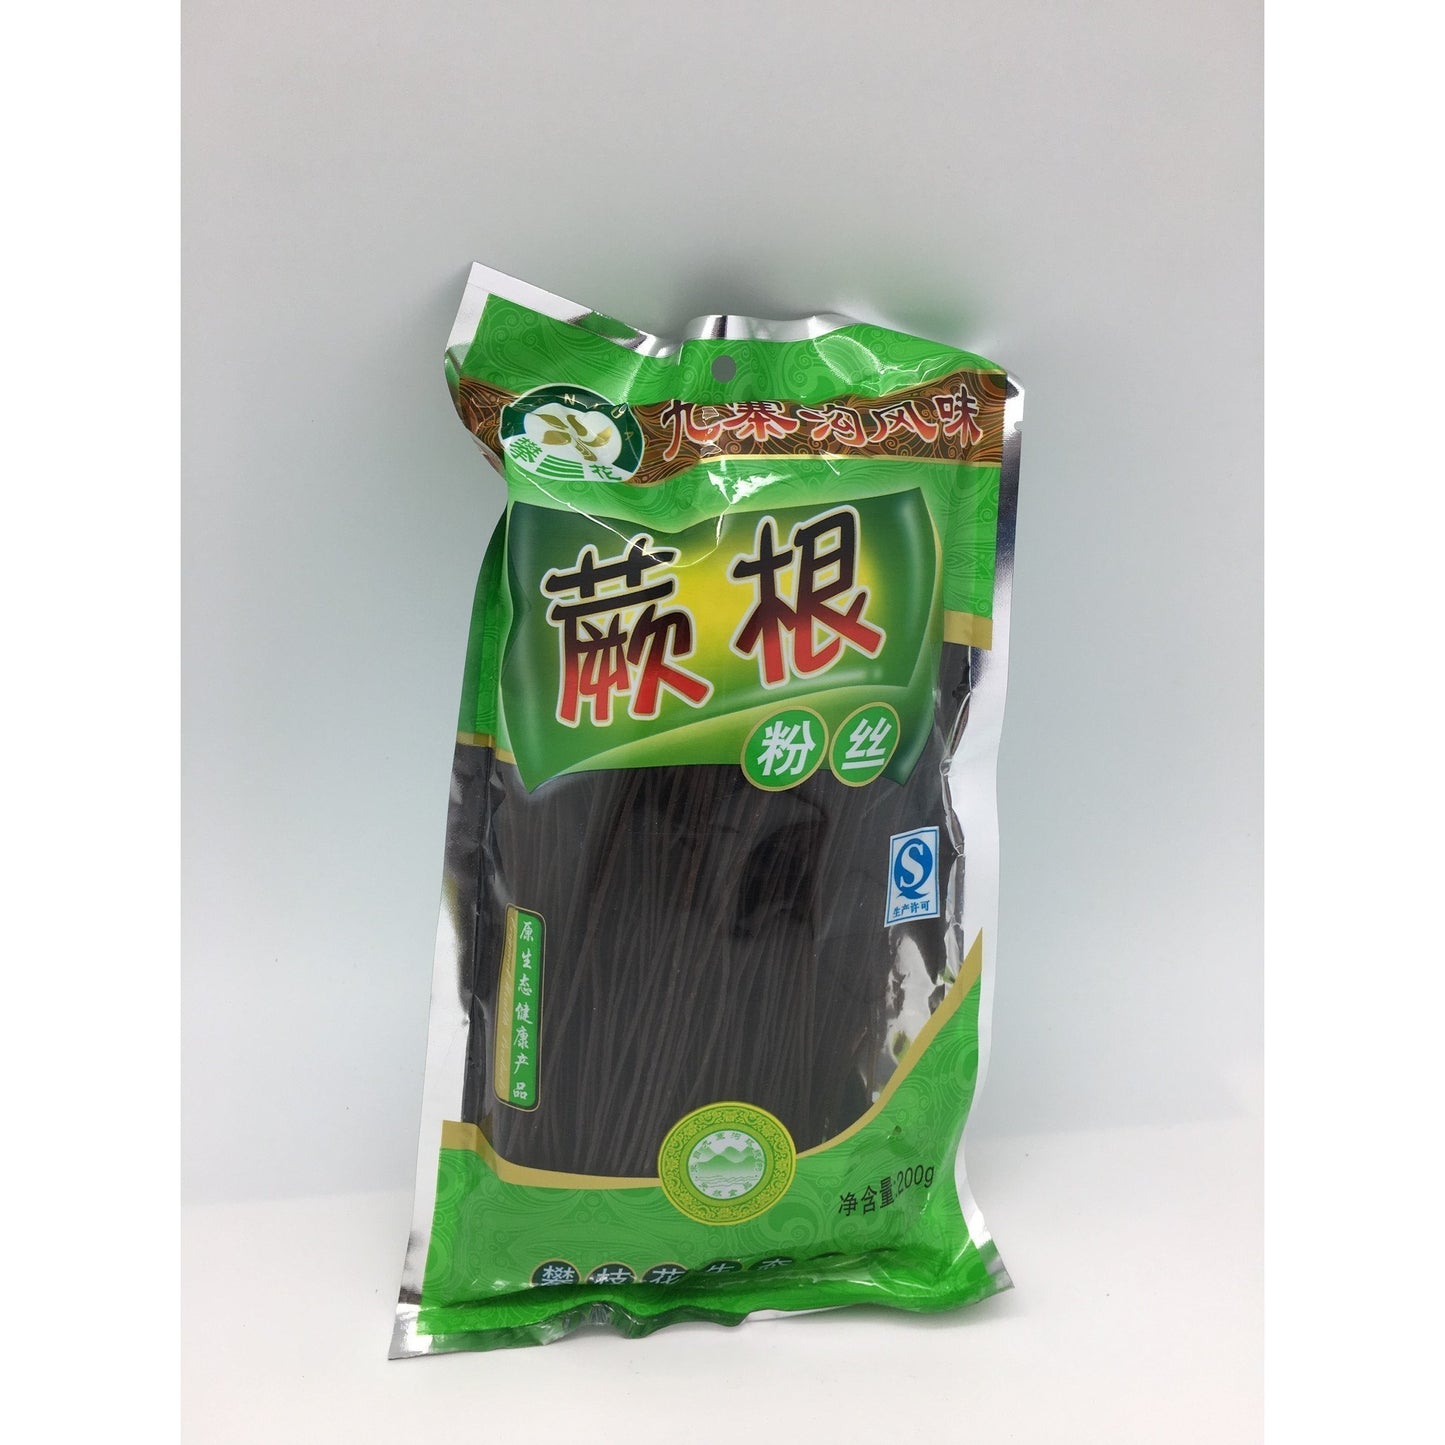 N034B JueGenFenSi Brand - Dried Noodles 200g - 30 bags / 1CTN - New Eastland Pty Ltd - Asian food wholesalers